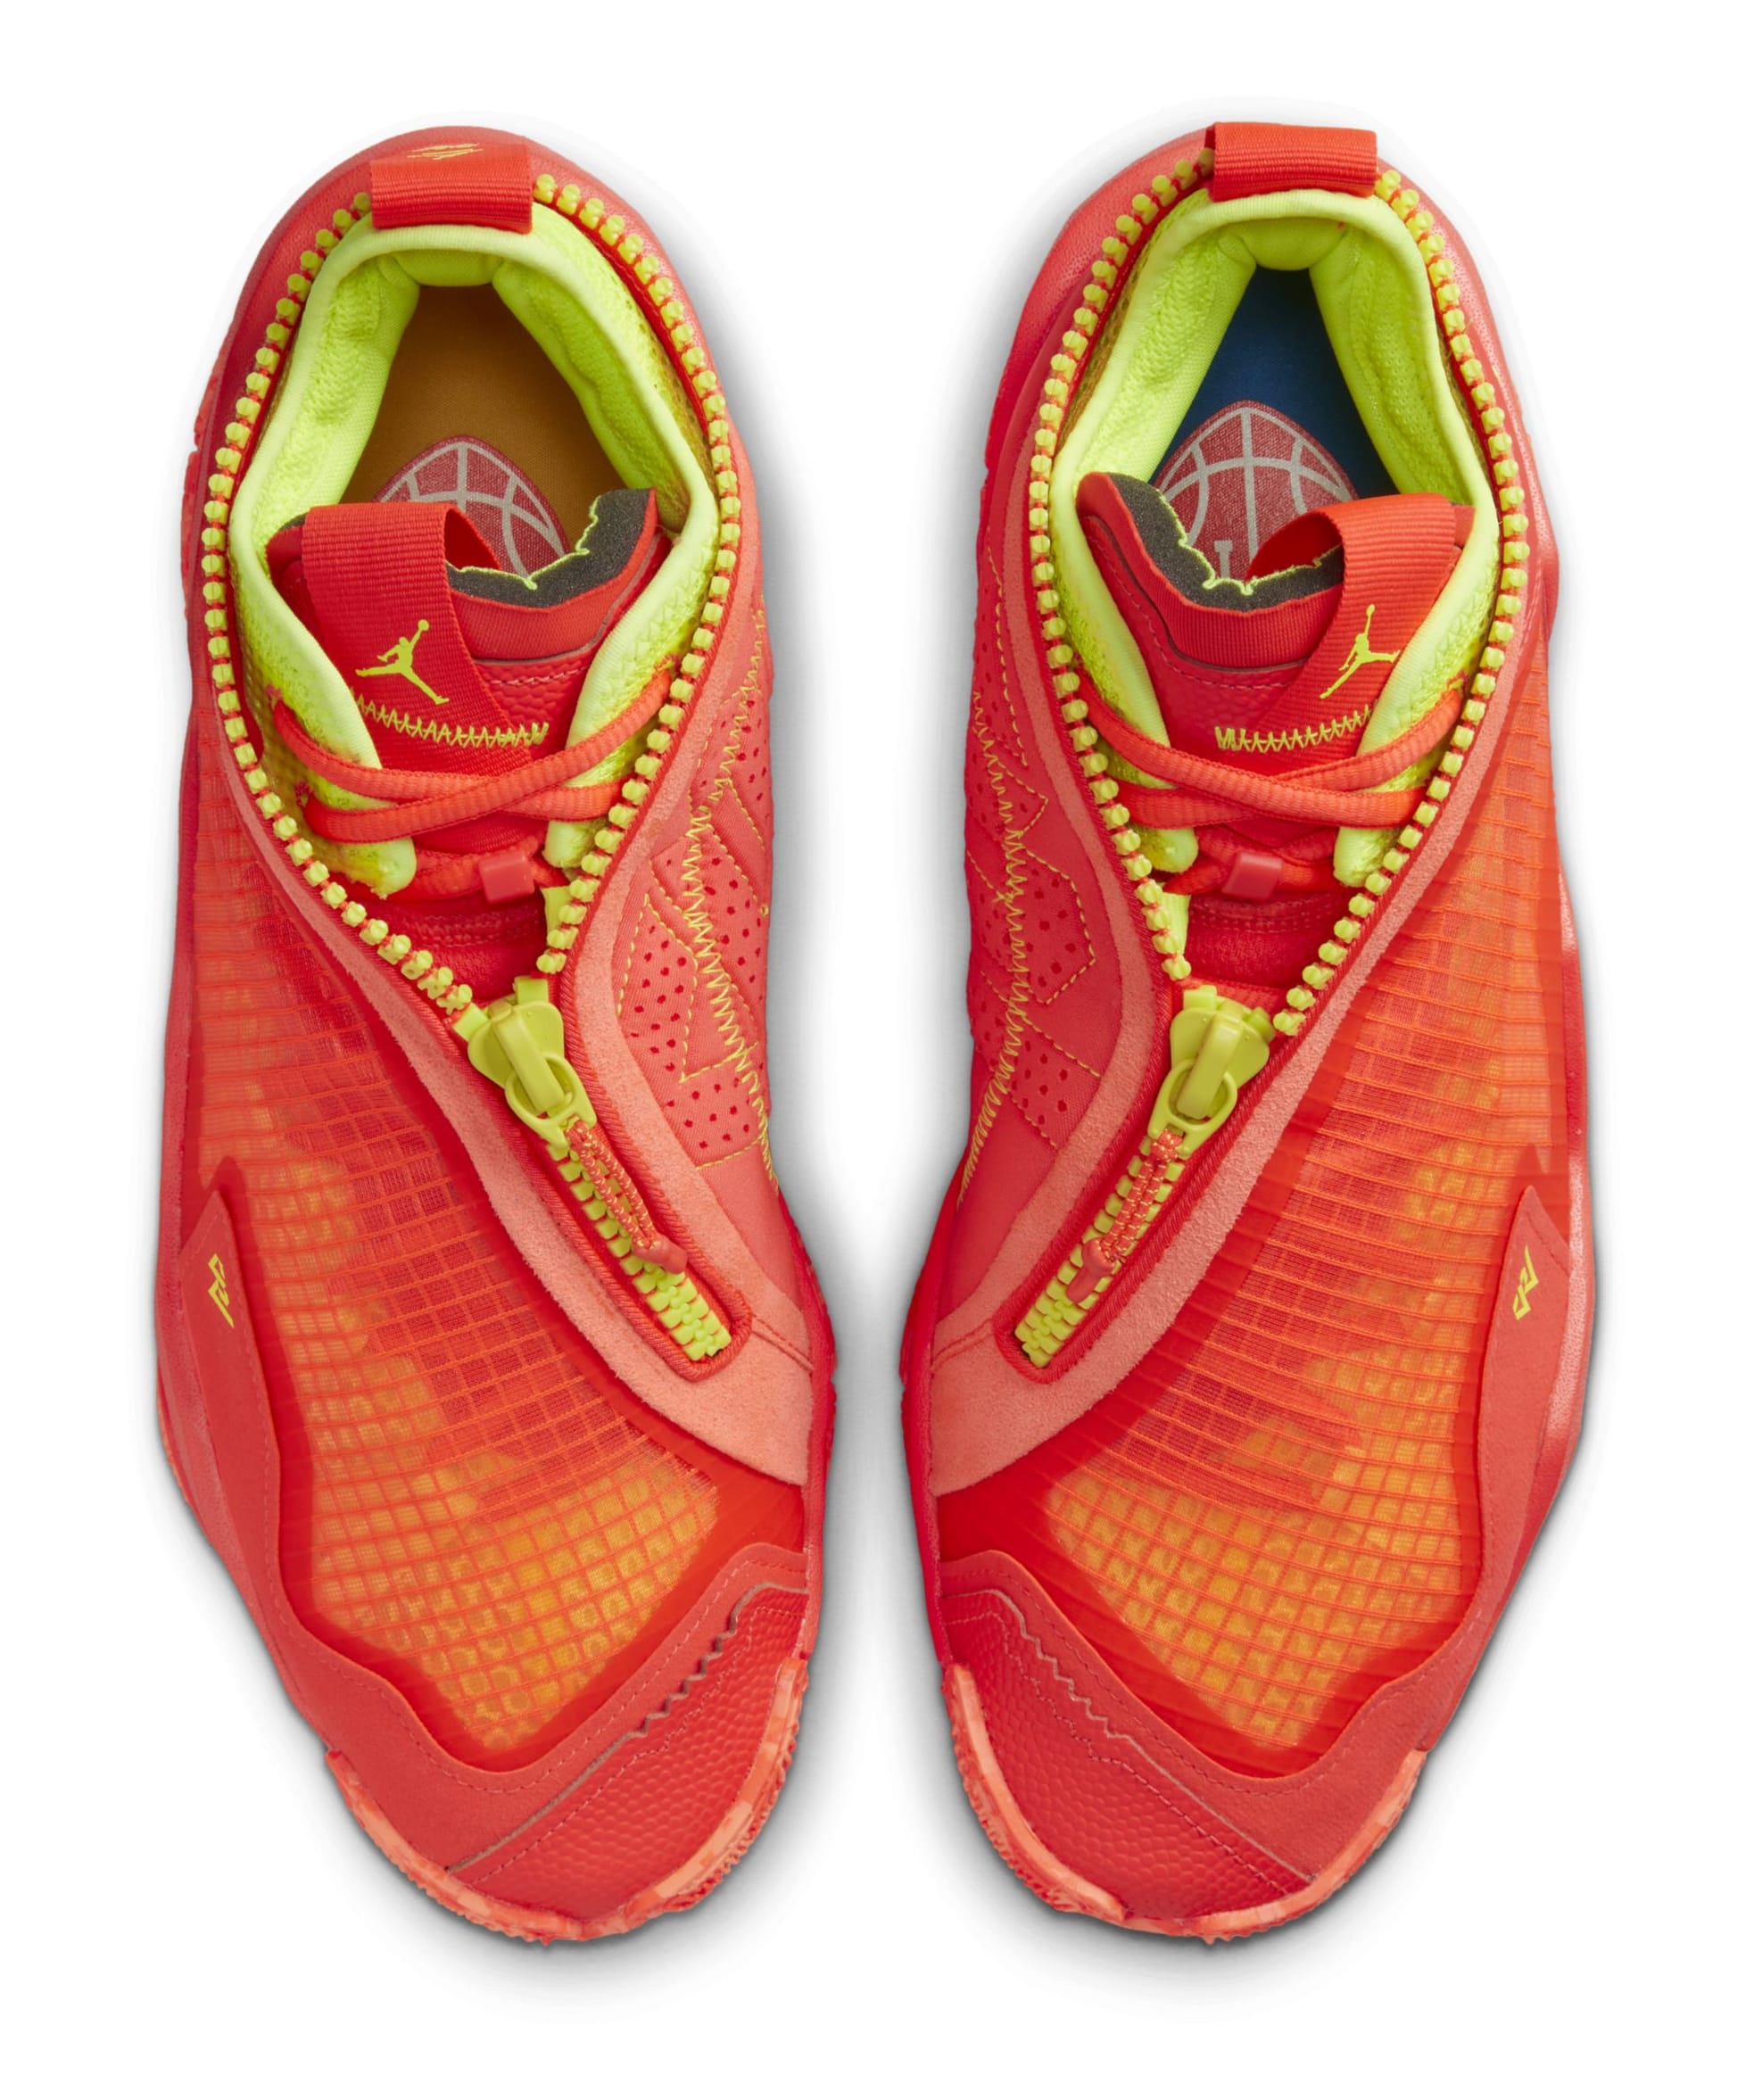 Closer Look at Russell Westbrook's Next Jordan Signature Shoe